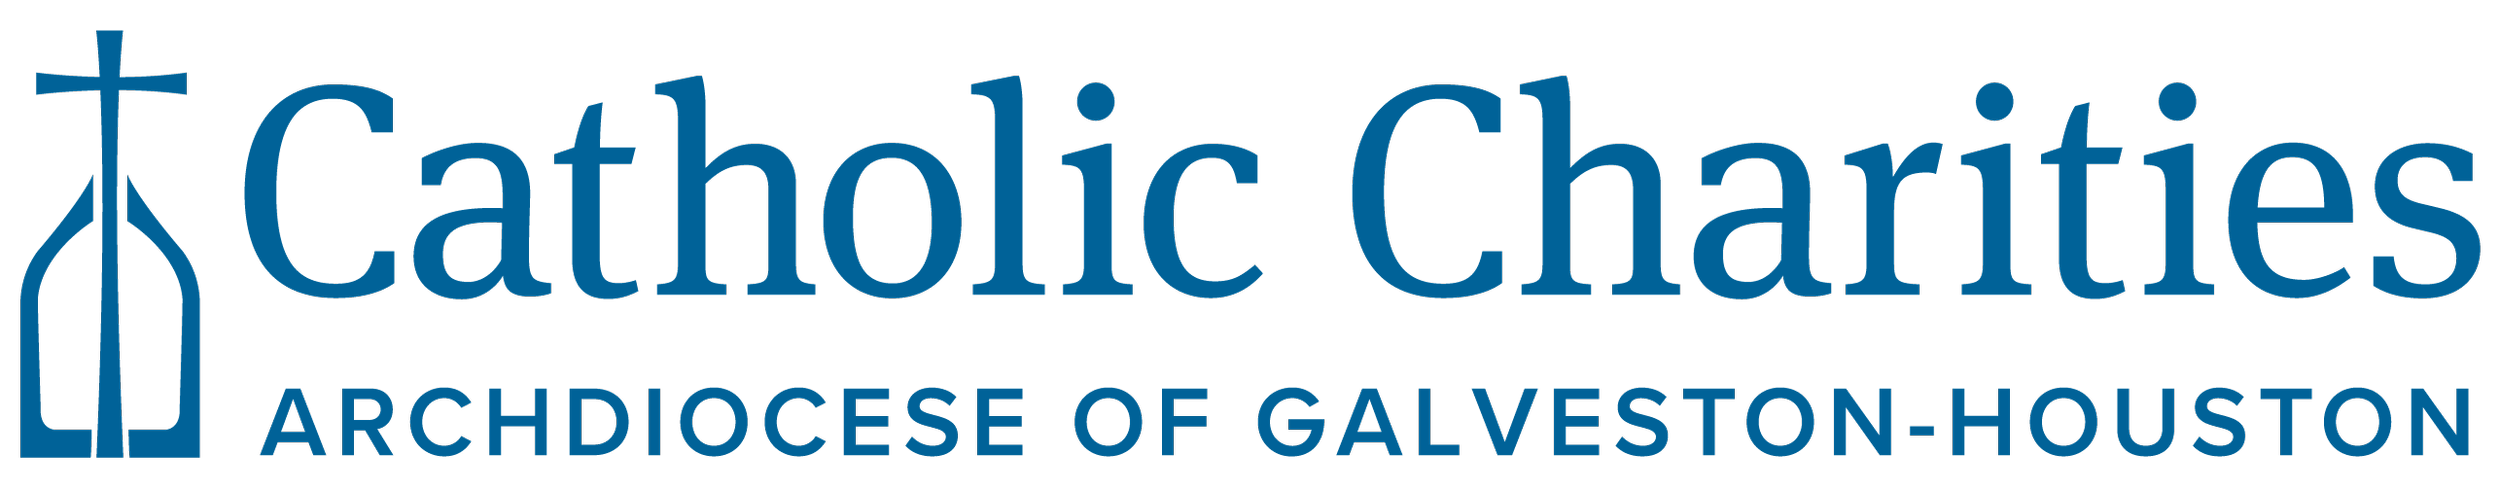 Organizaciones Benéficas Católicas - Arquidiócesis de Galveston-Houston